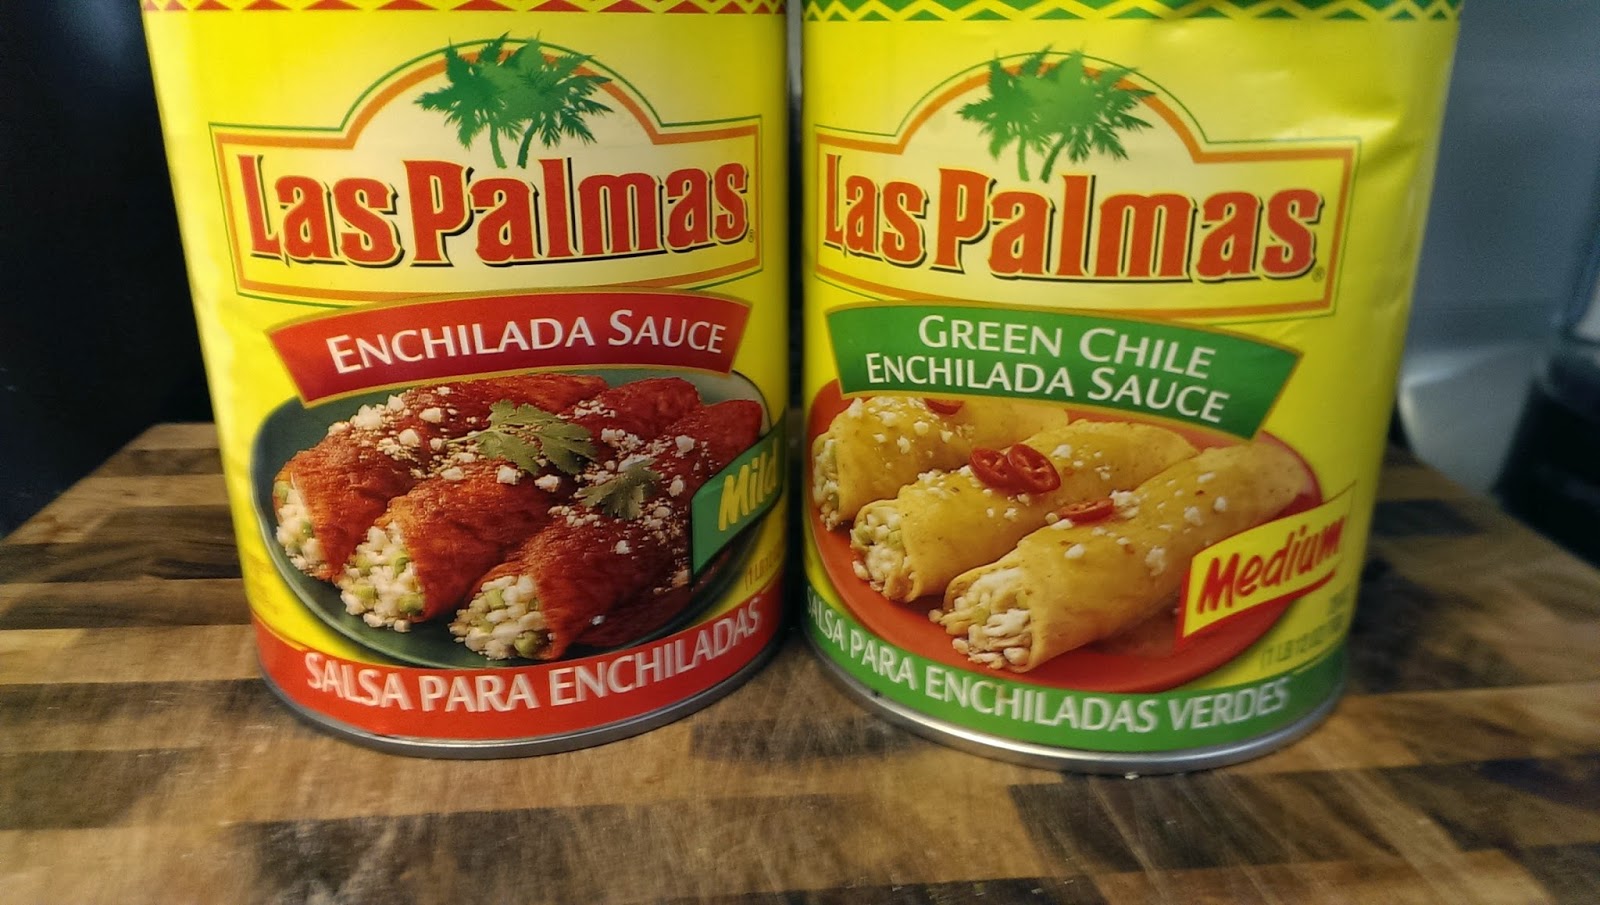 Las+Palmas Las Palmas Enchilada Sauce Recipes - National Sauce Month